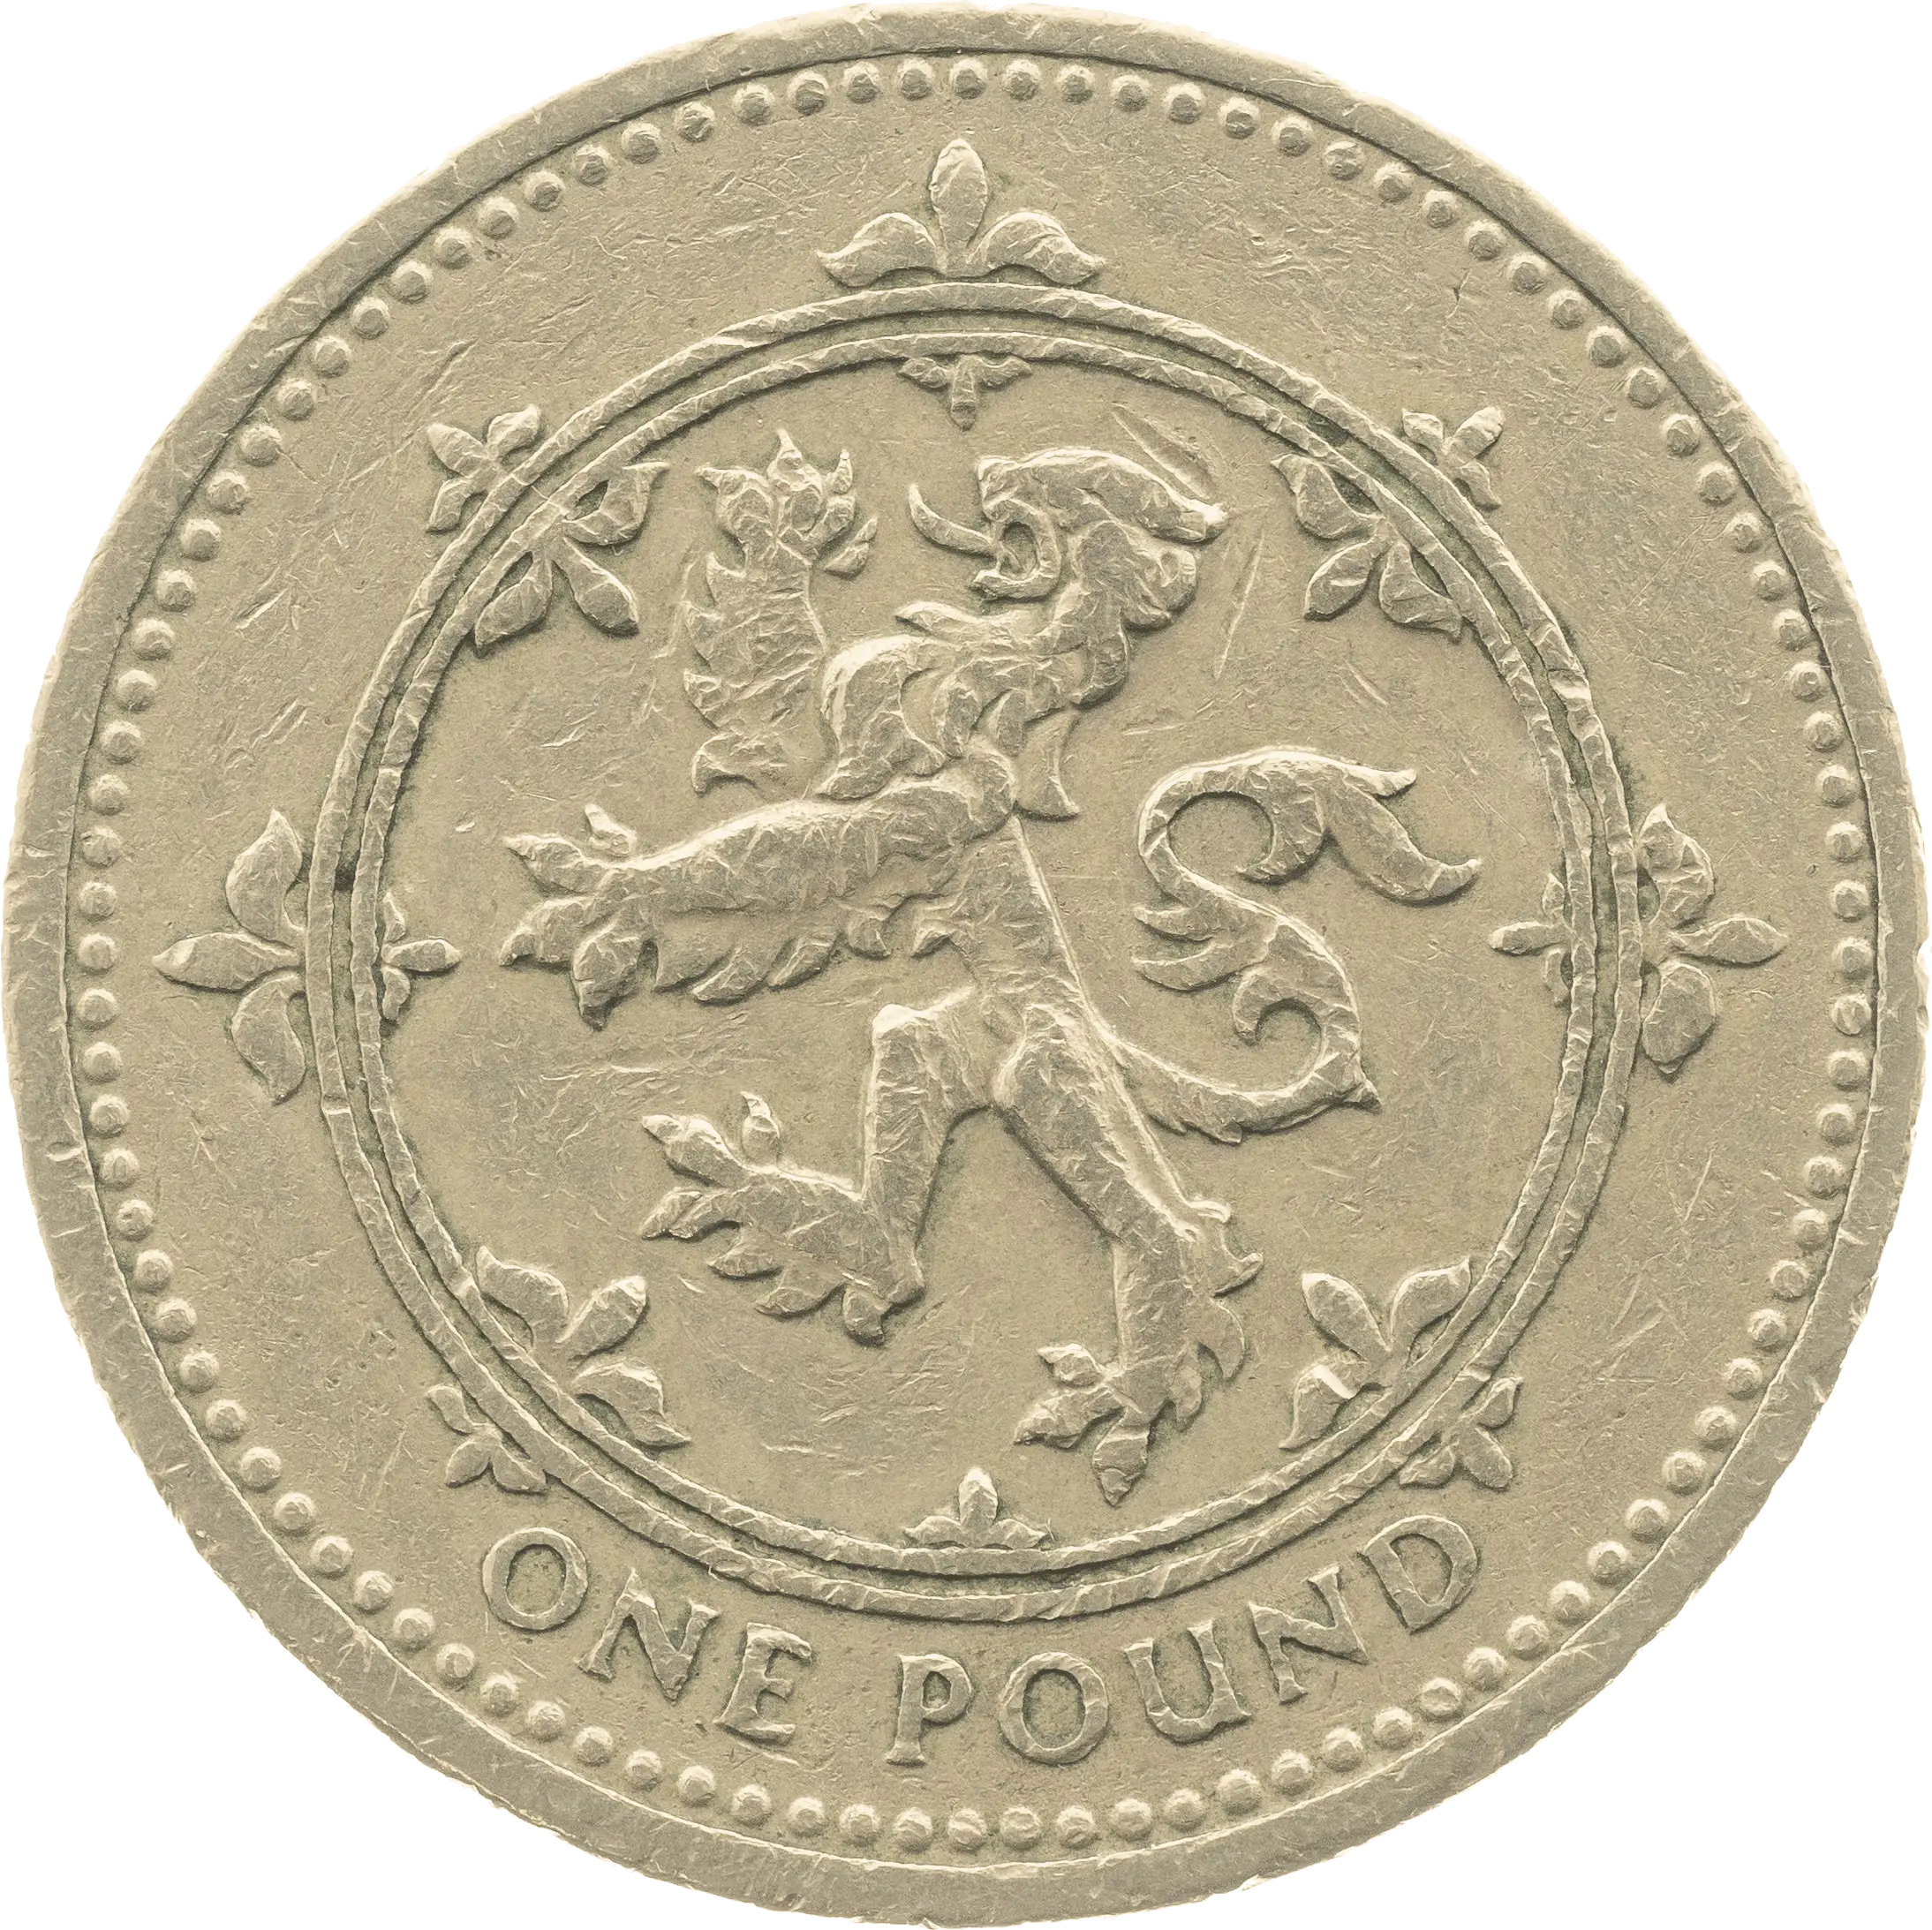 Lion Rampant £1 Coin